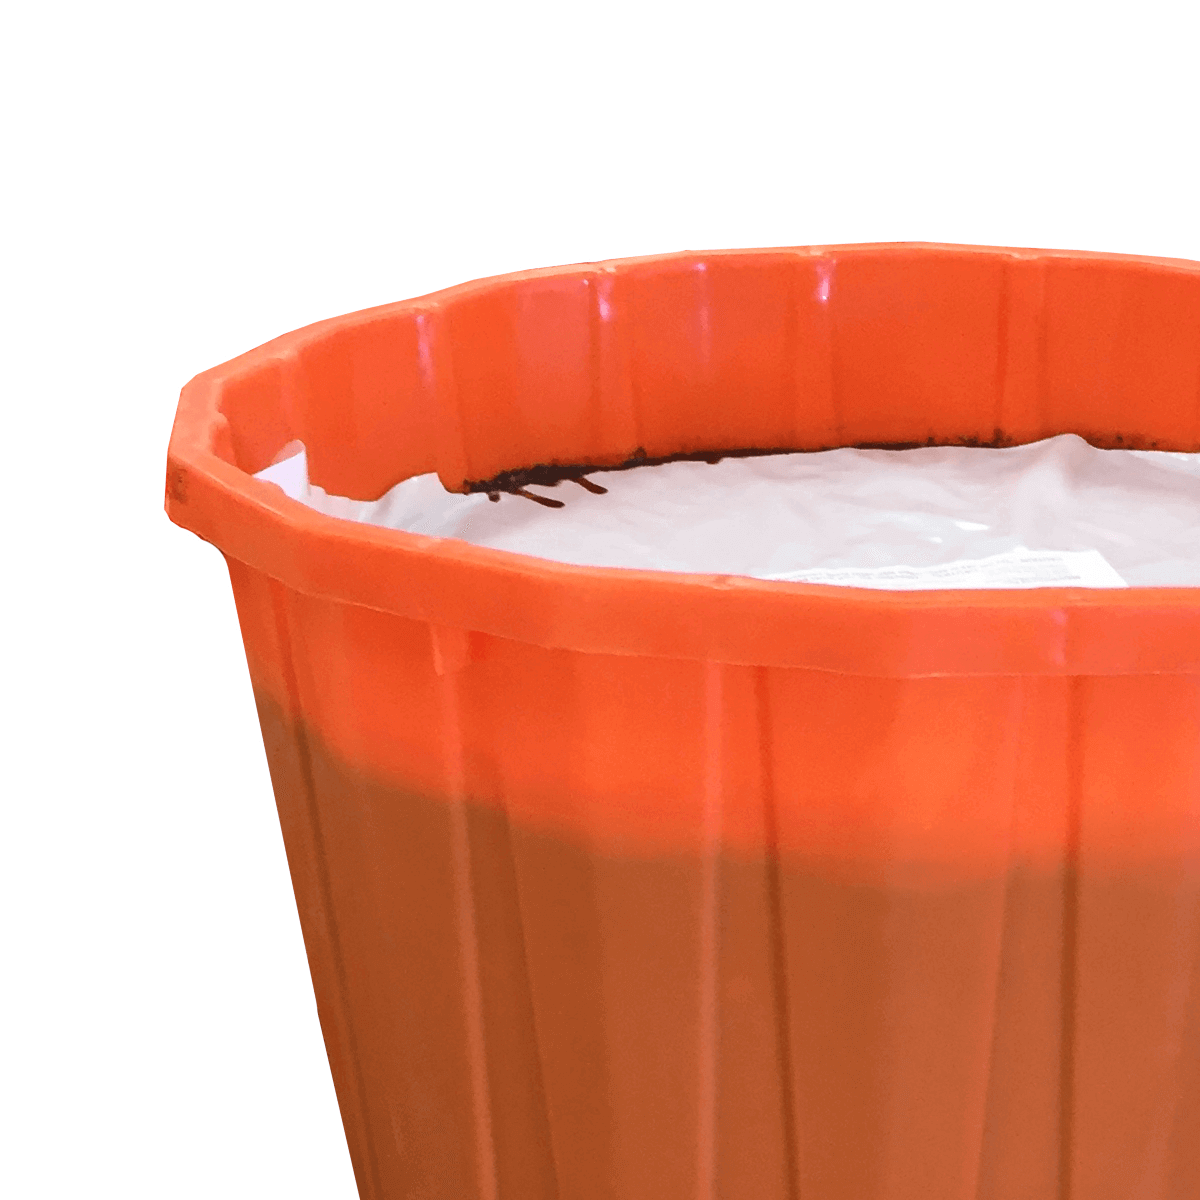 PROSTOCK™ Low Moisture Tub - Orange - 30:15 - 113 kg